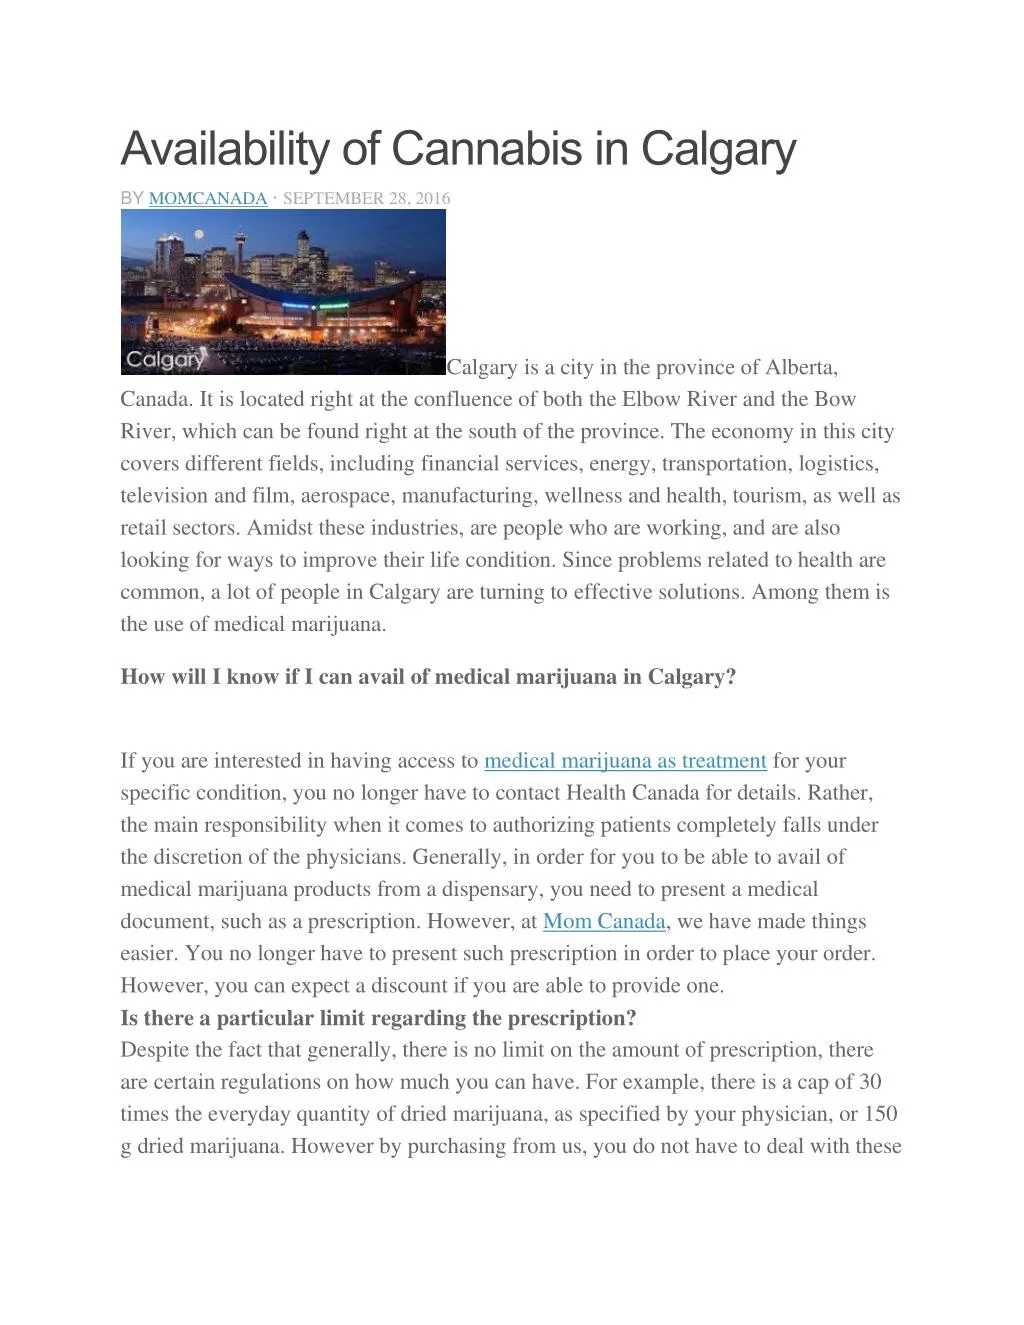 availability of cannabis in calgary